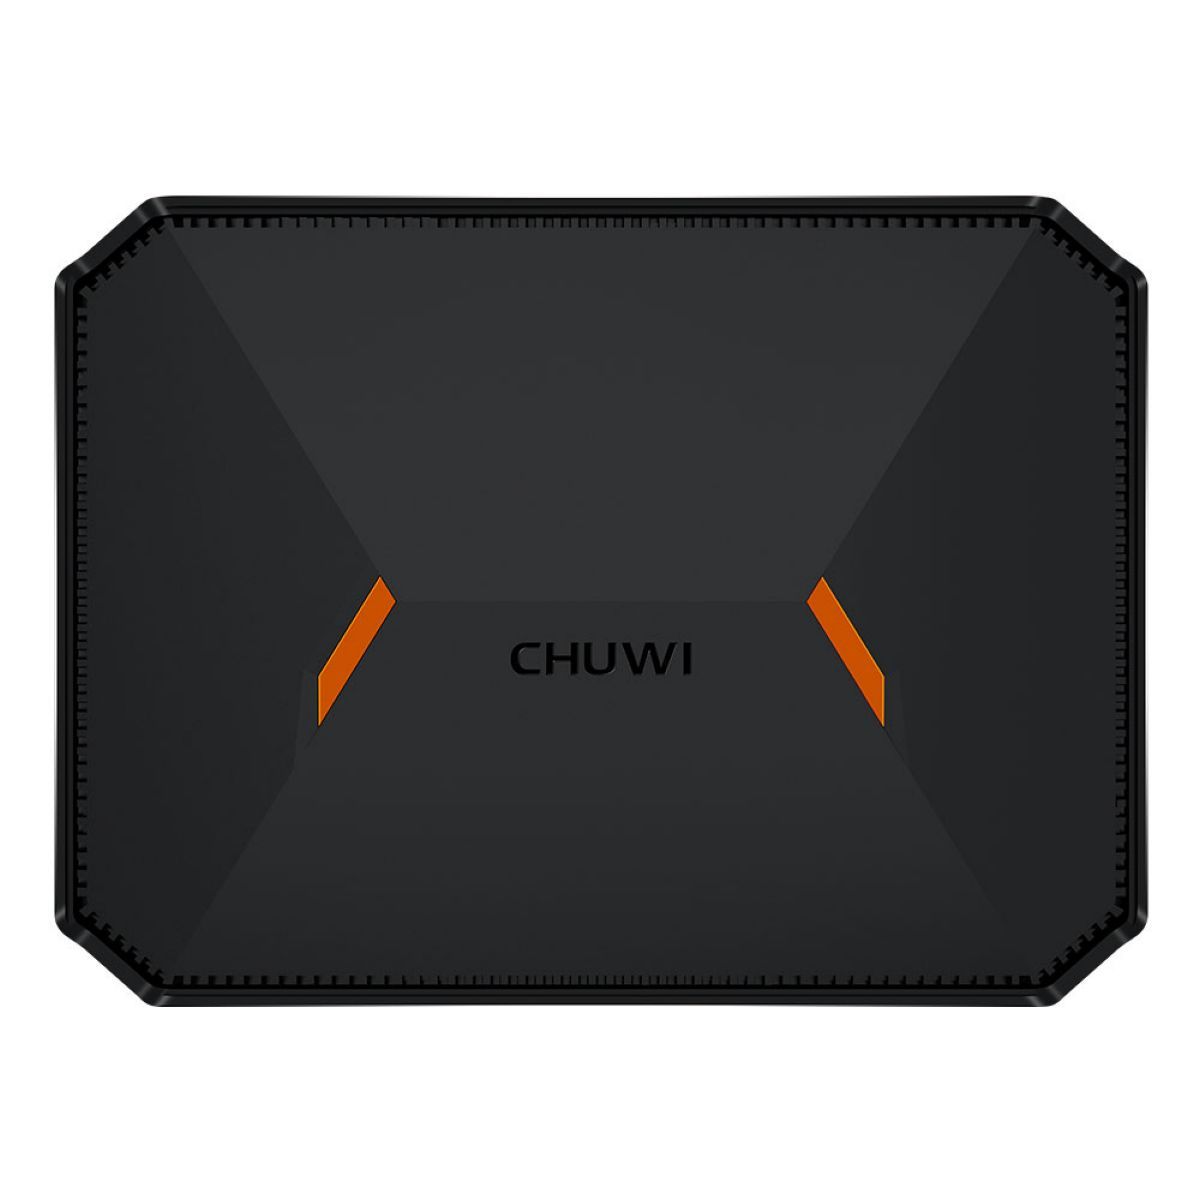 Mini Pc Chuwi Herobox J4125 Win 10 Pro